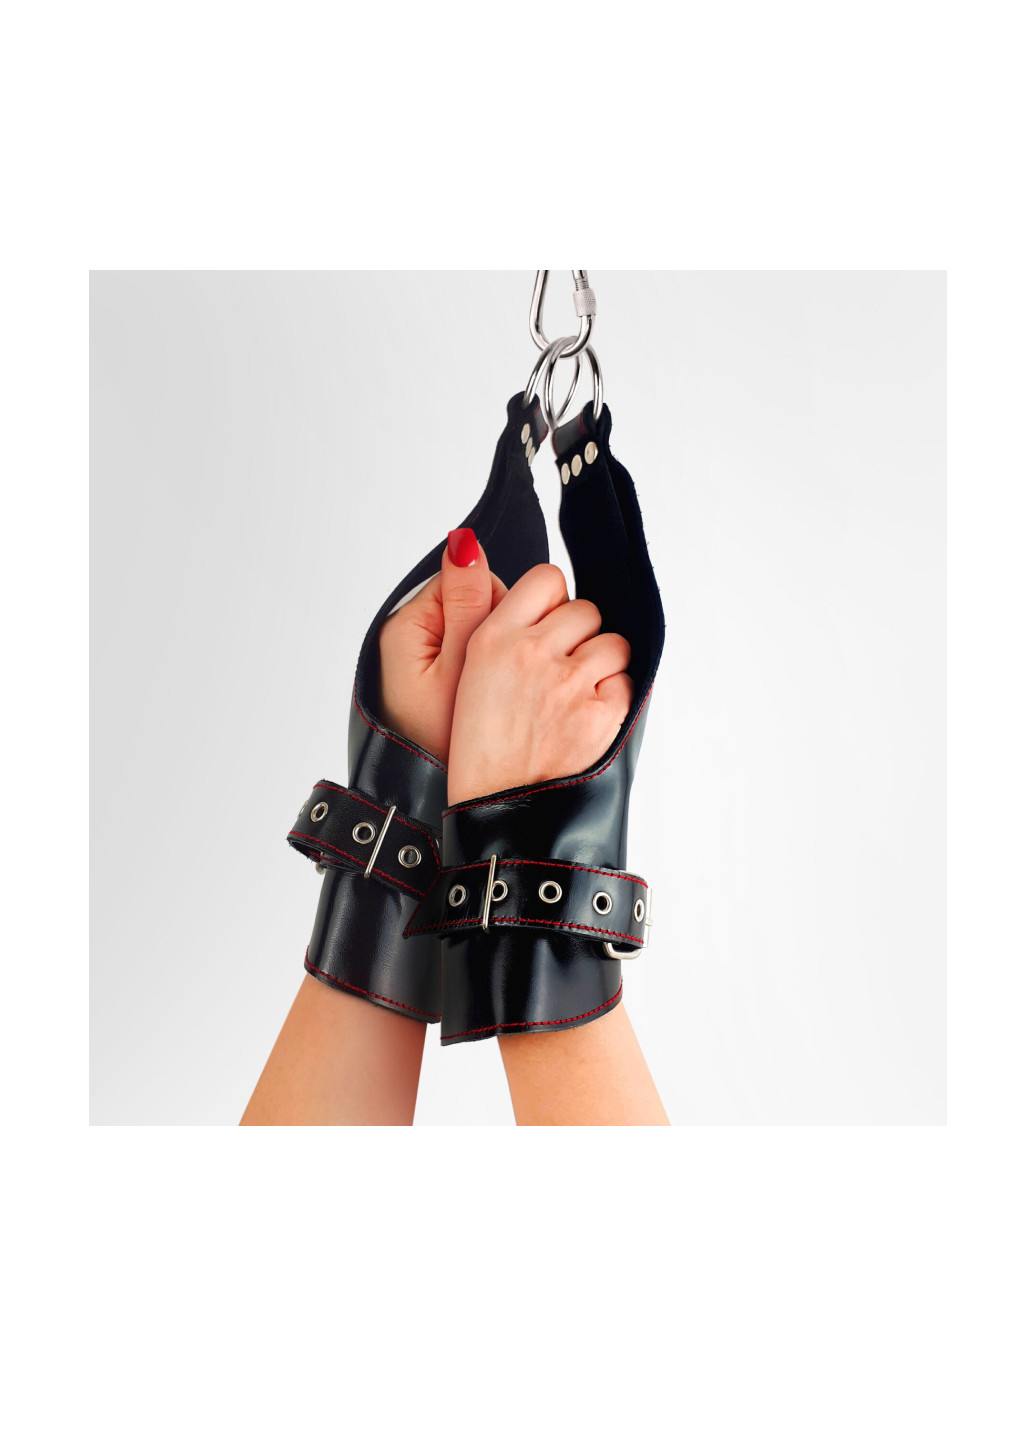 Поручі для підвісу Fetish Hand Cuffs For Suspension із натуральної шкіри Art of Sex (252268799)